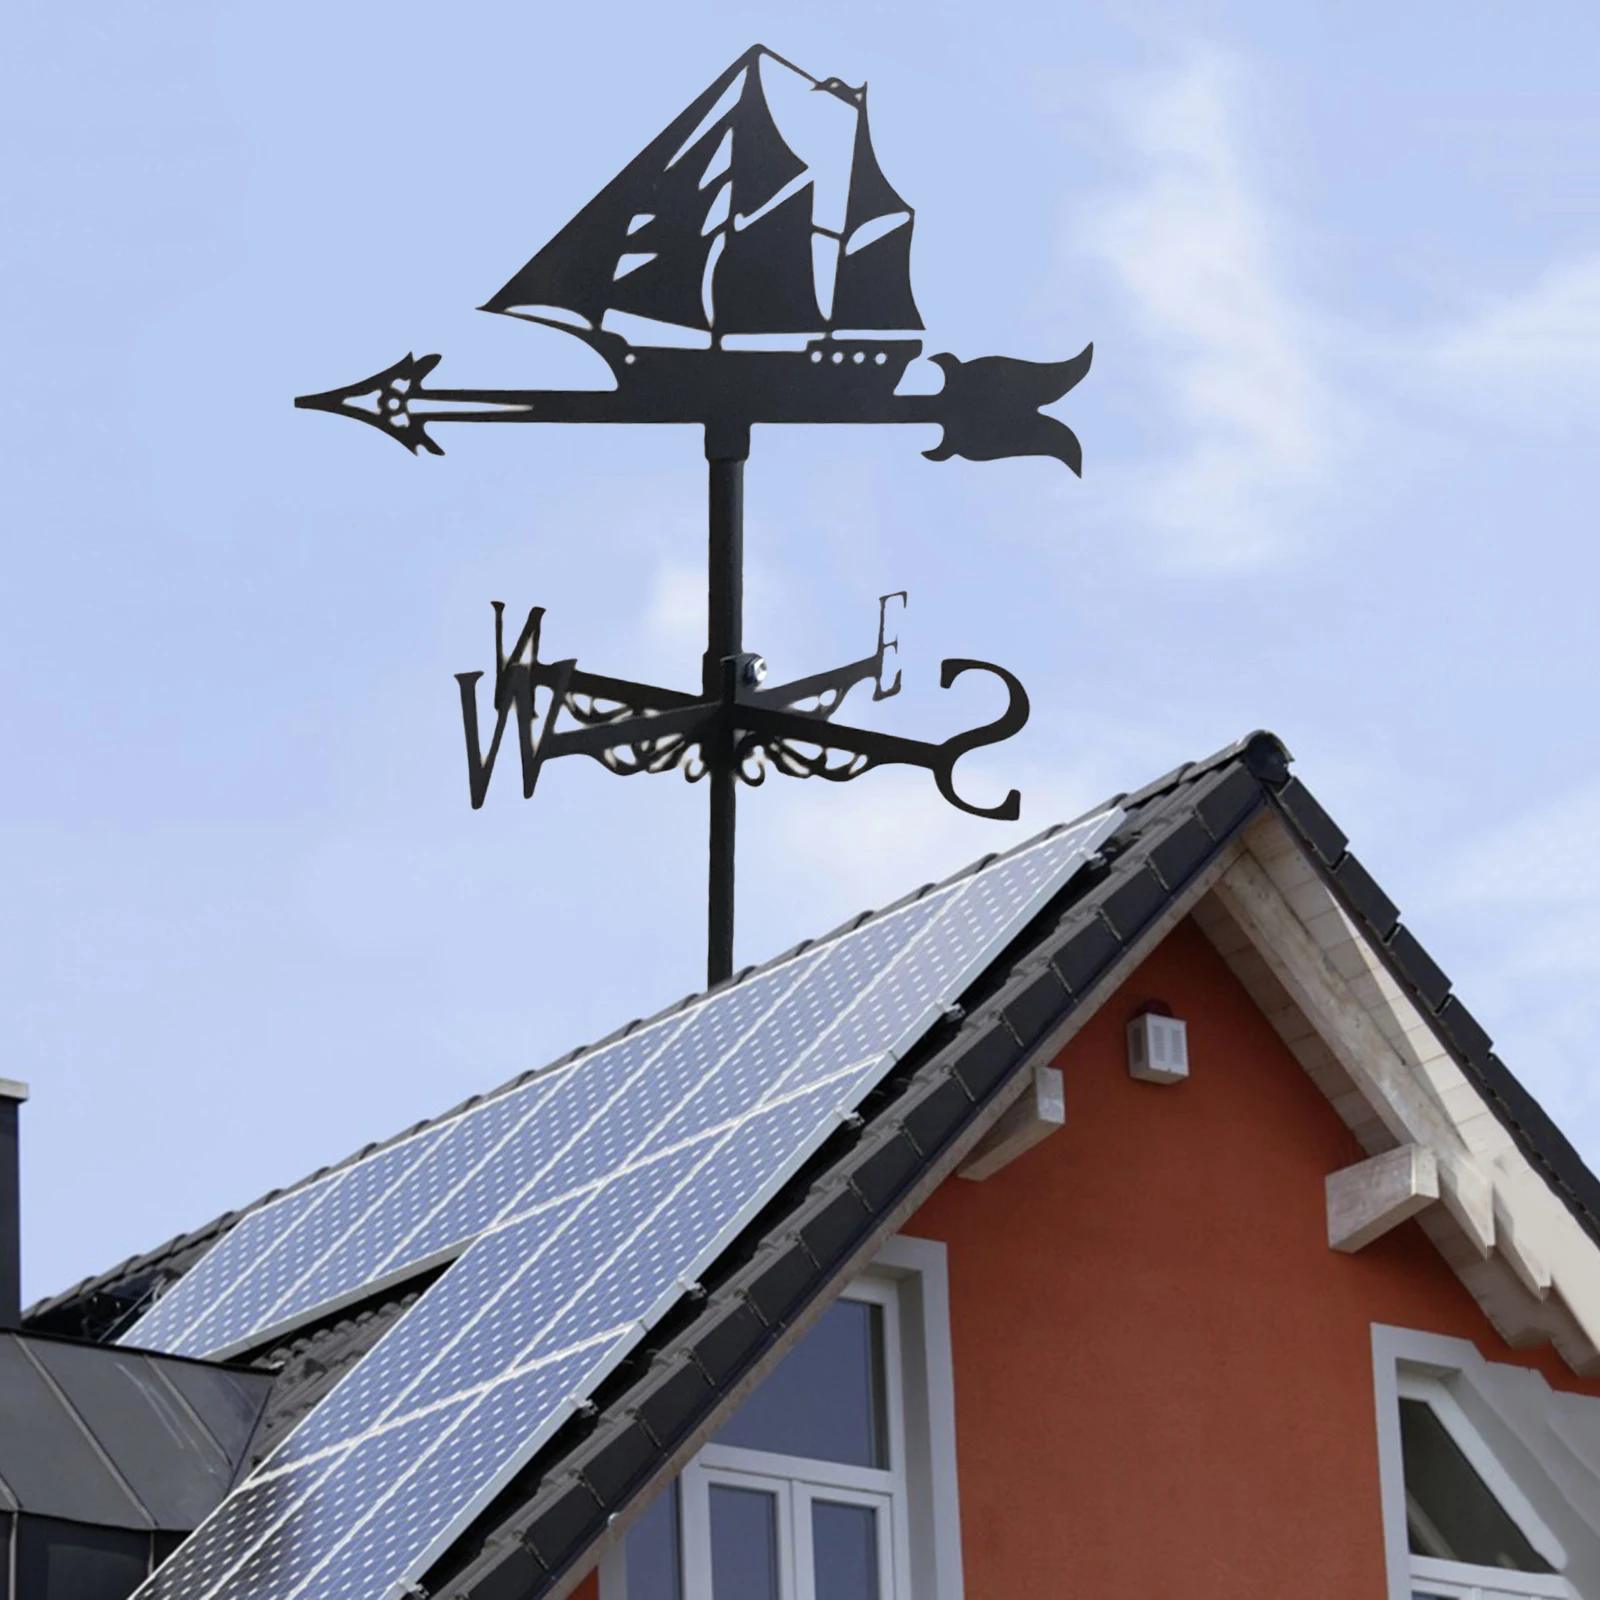 Iron Angler Wind Vane Roof Mount Wind Direction Indicator Measuring Tools Decor